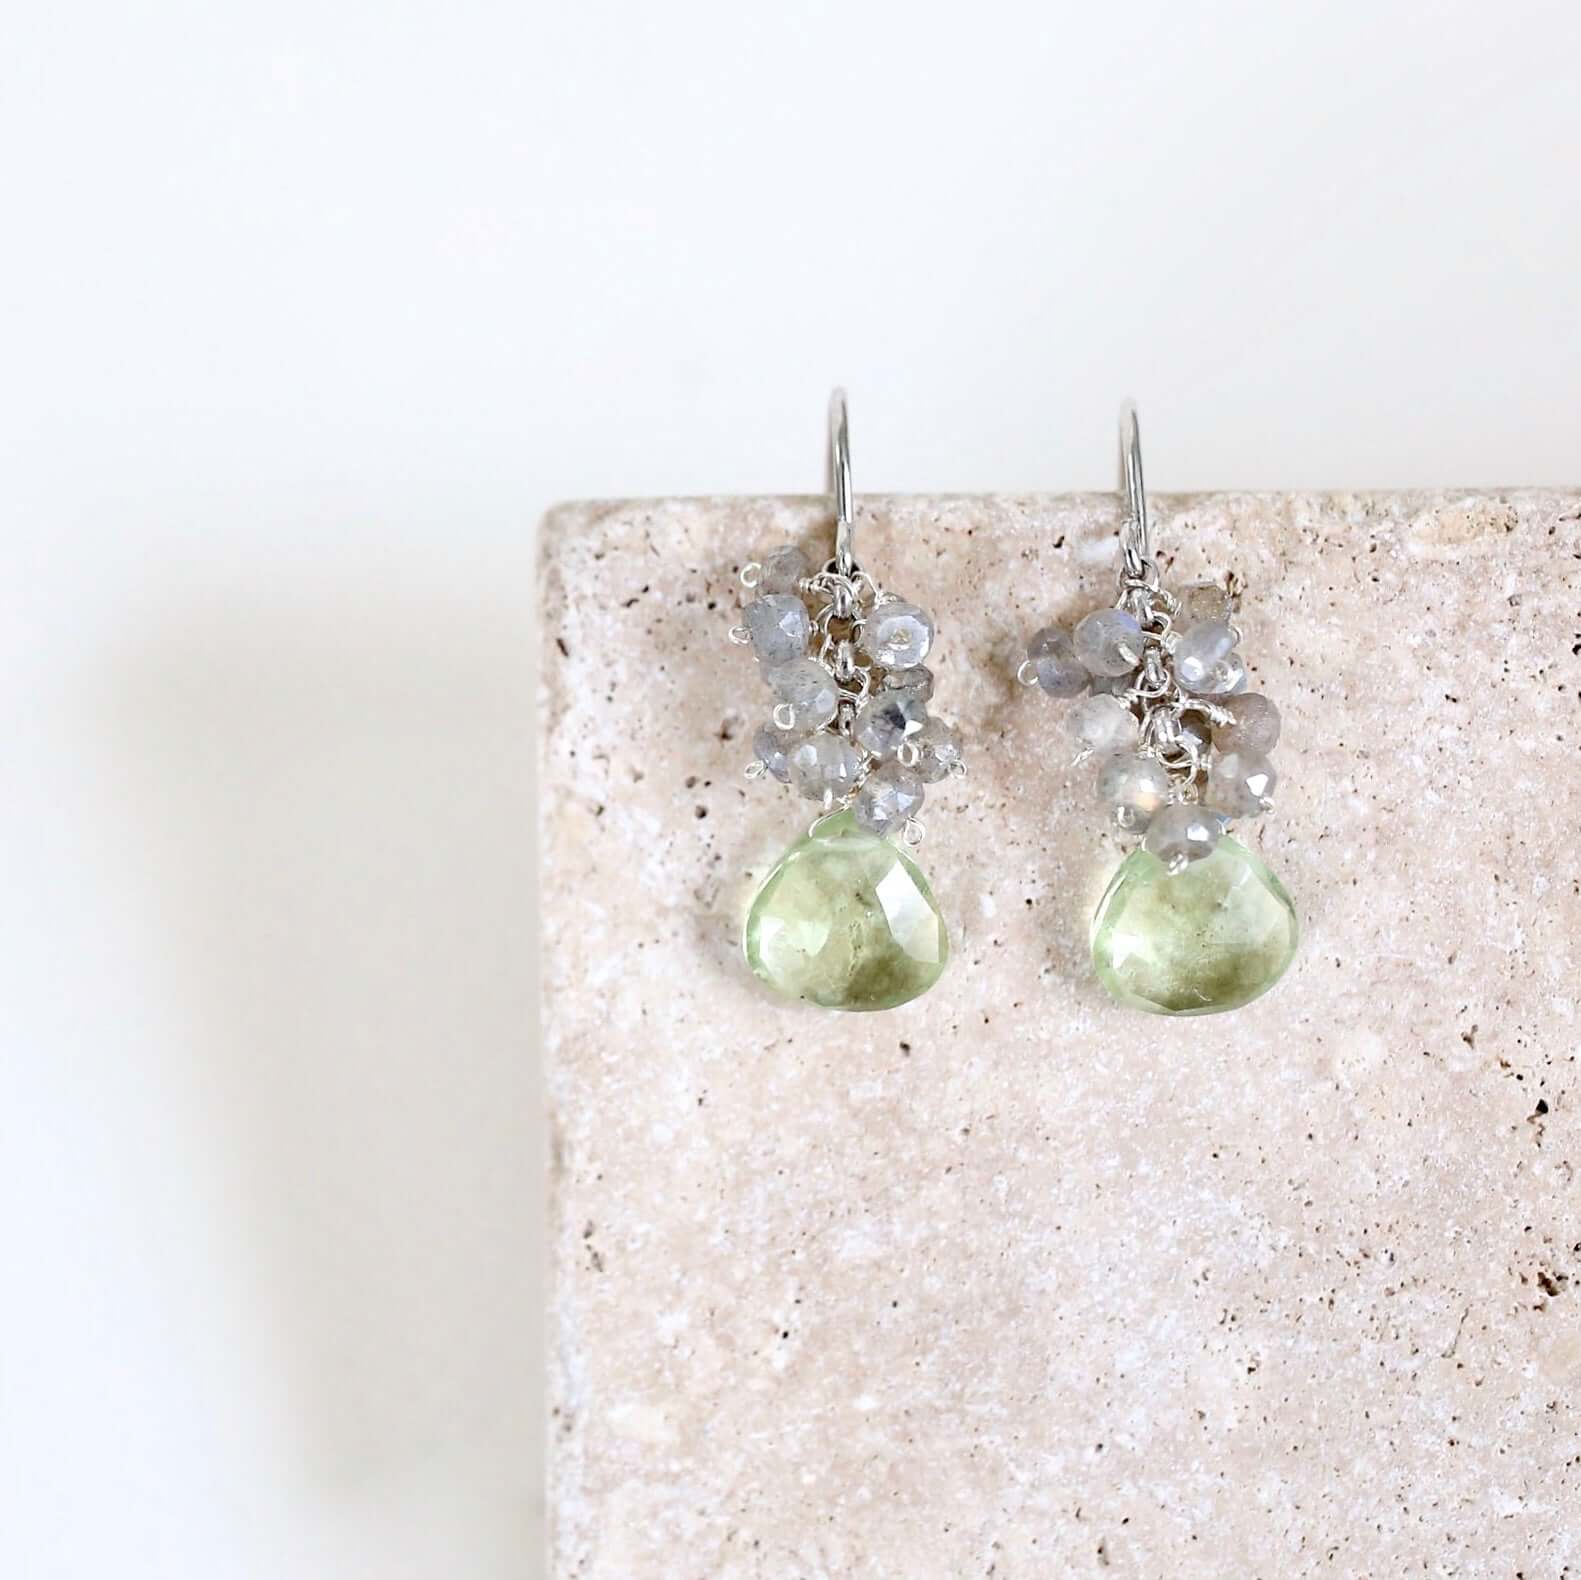 Rhodium-Plated Earrings Showcase Green Amethyst and Labradorite Gems